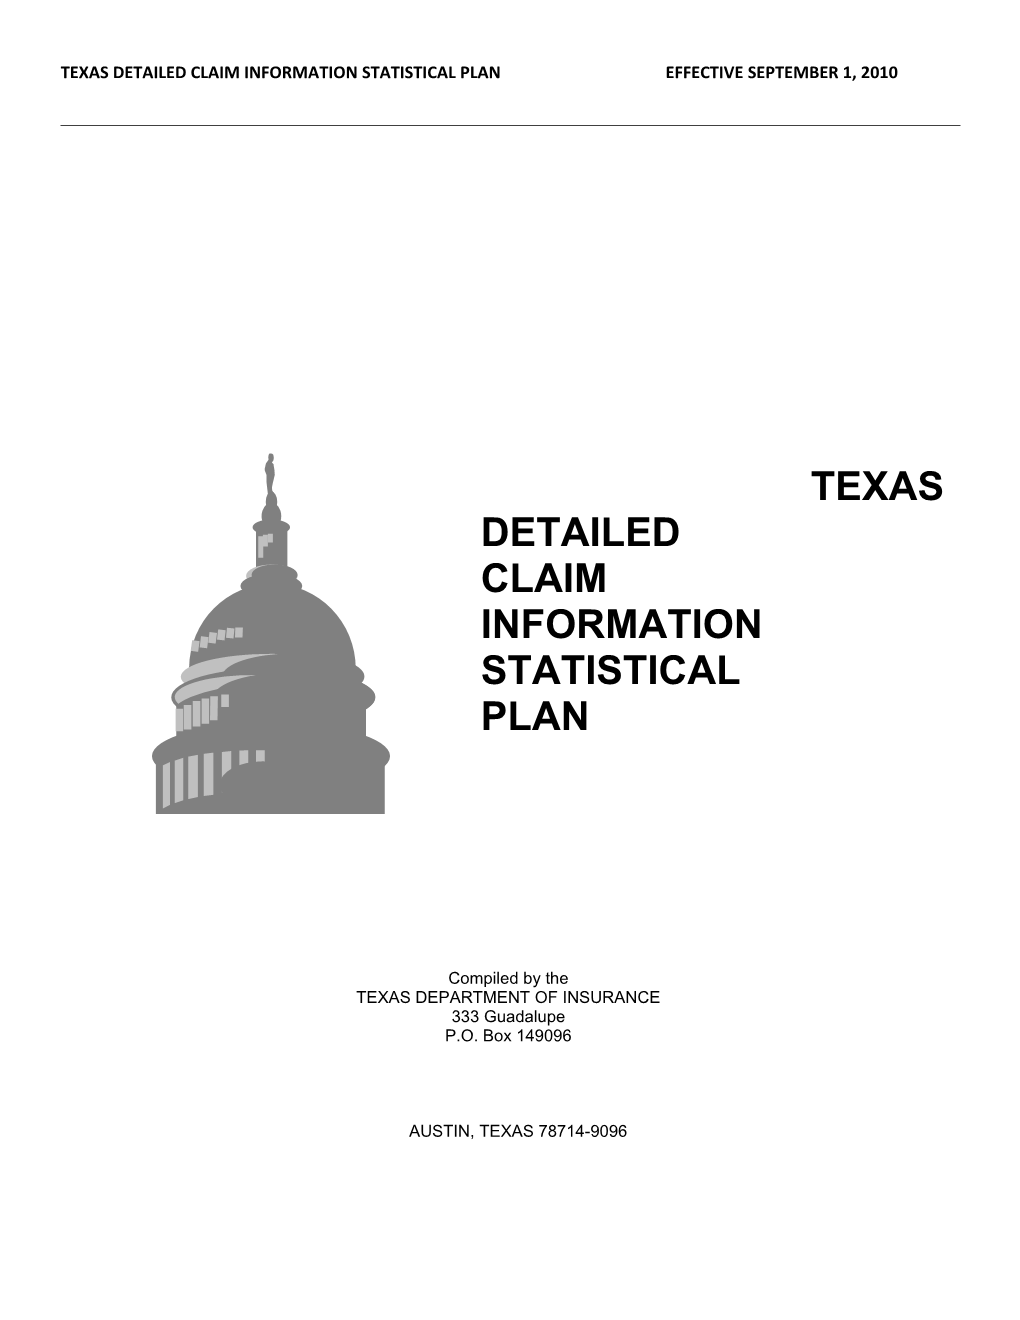 Texas Detailed Claim Information Statistical Plan Effective September 1, 2010